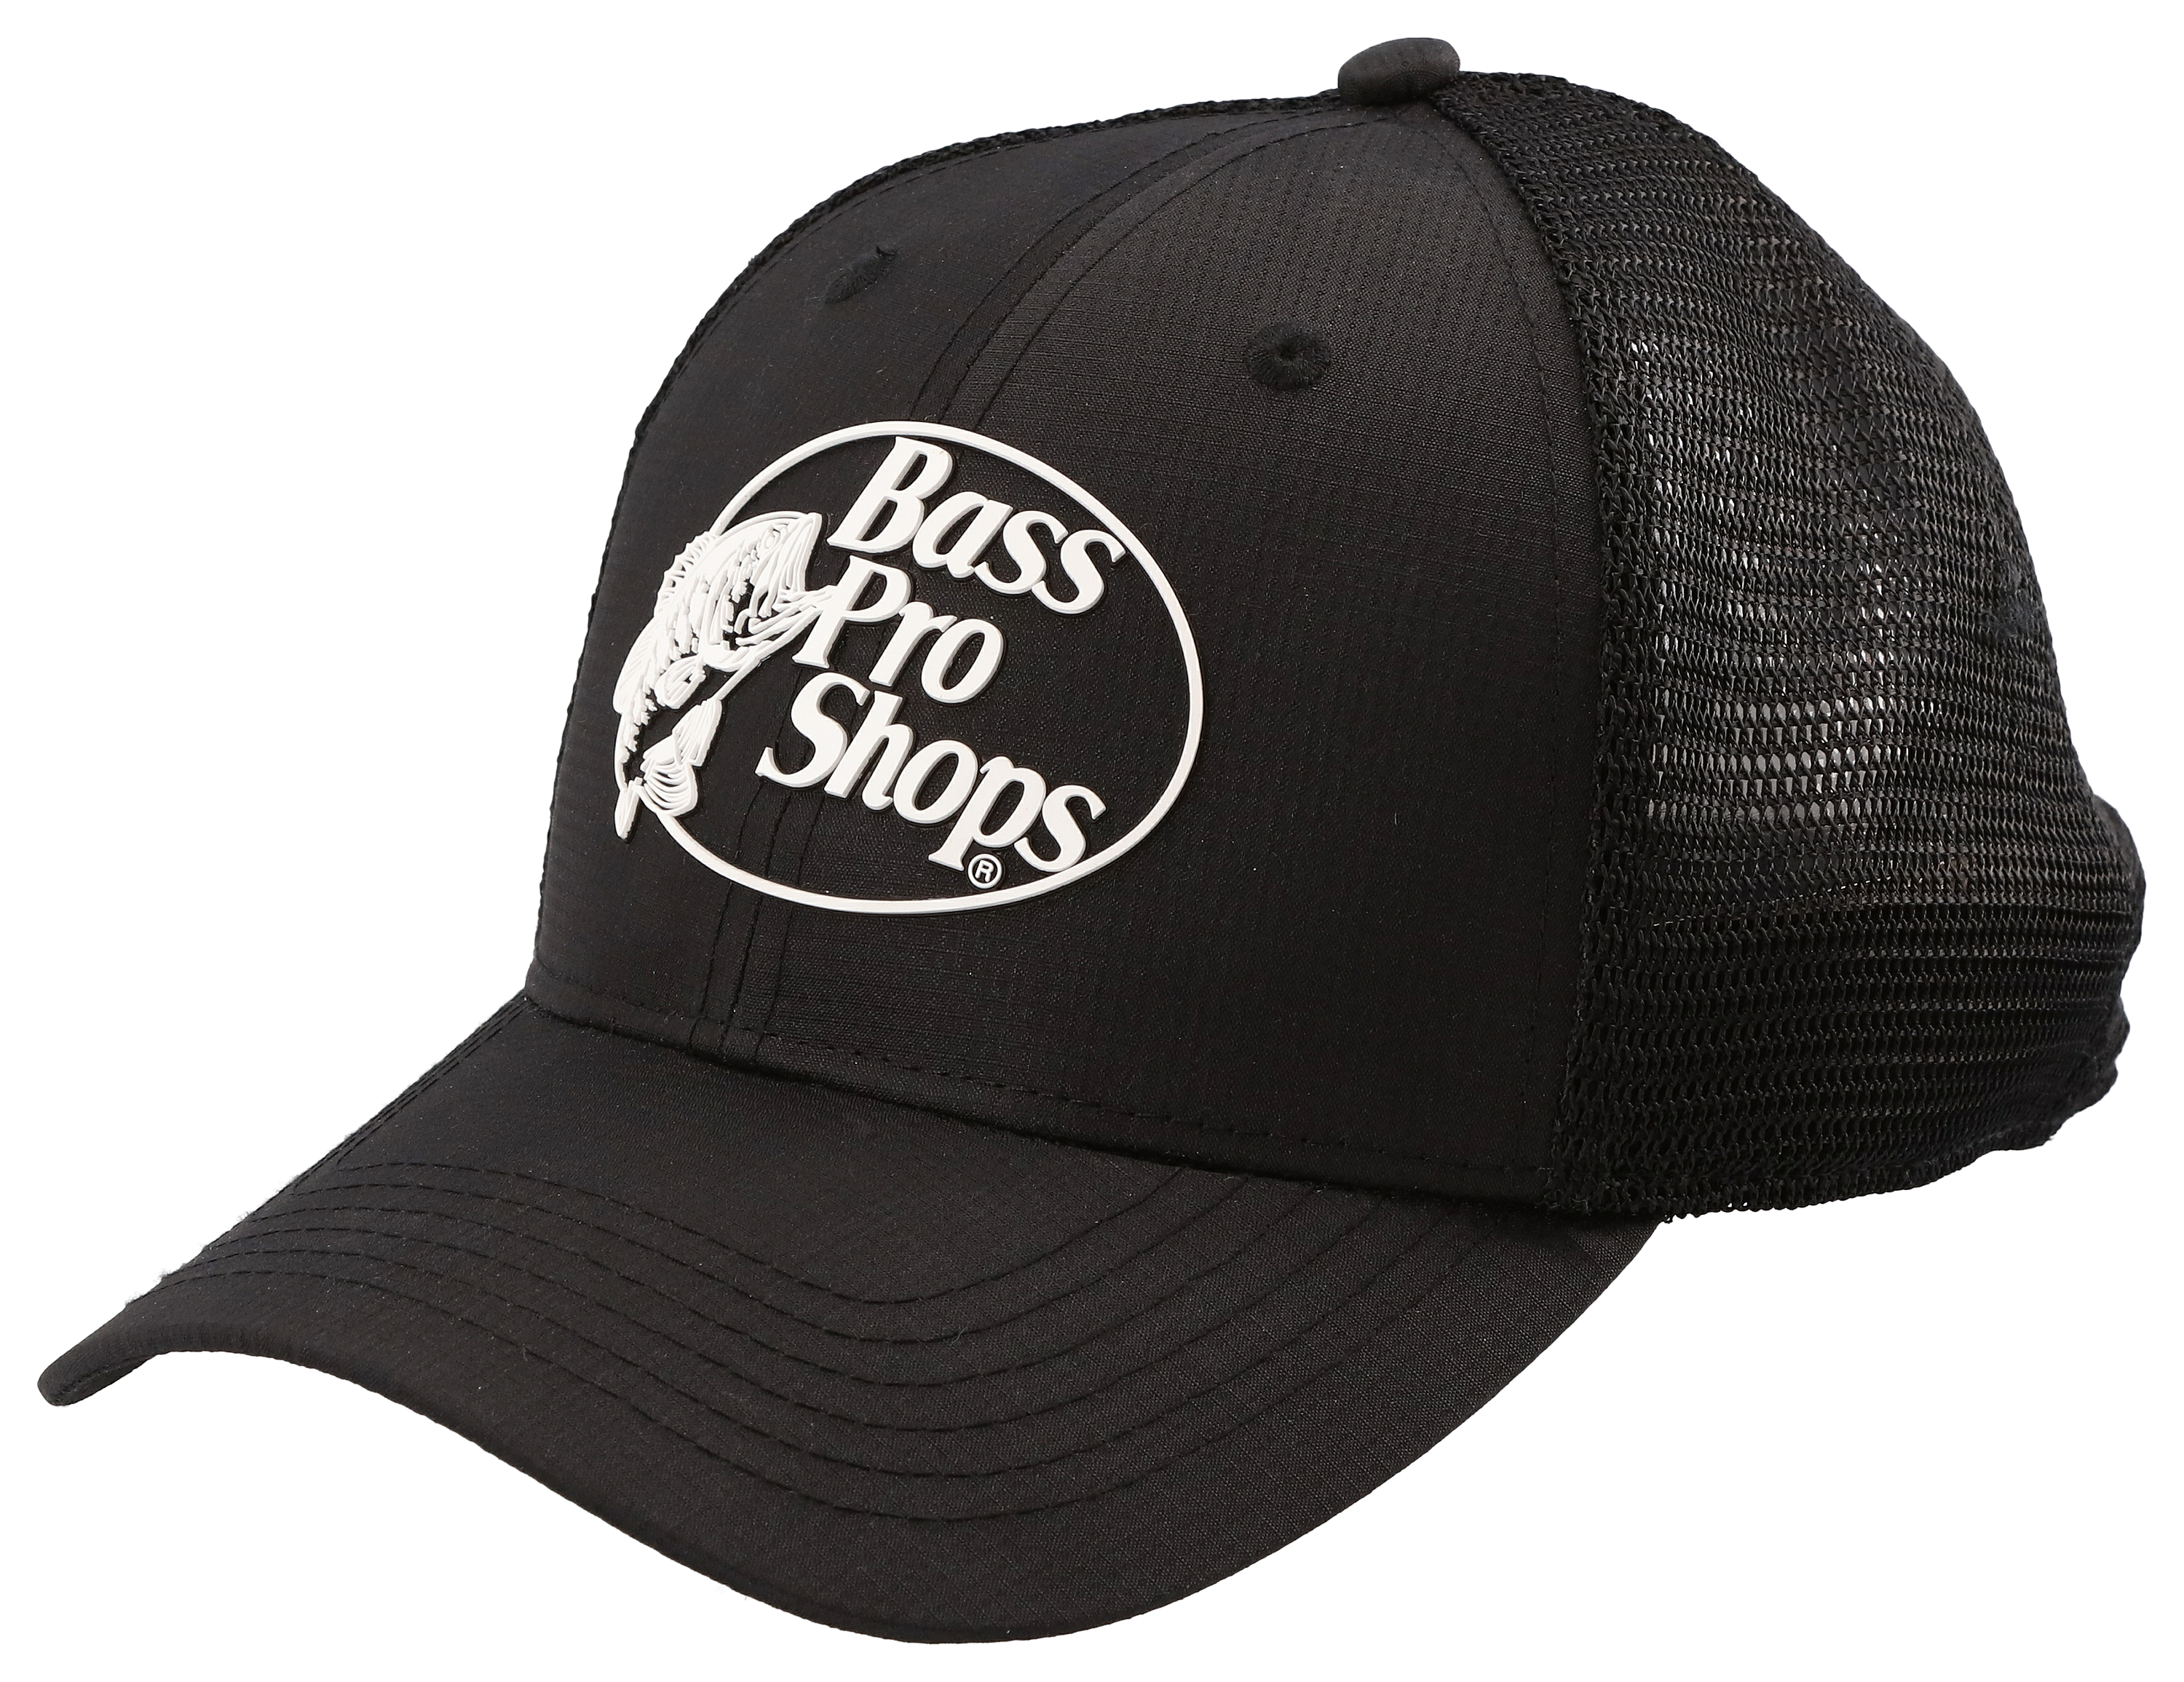 Bass Pro Shops Logo Flex Cap - Charcoal/Black - SM/M